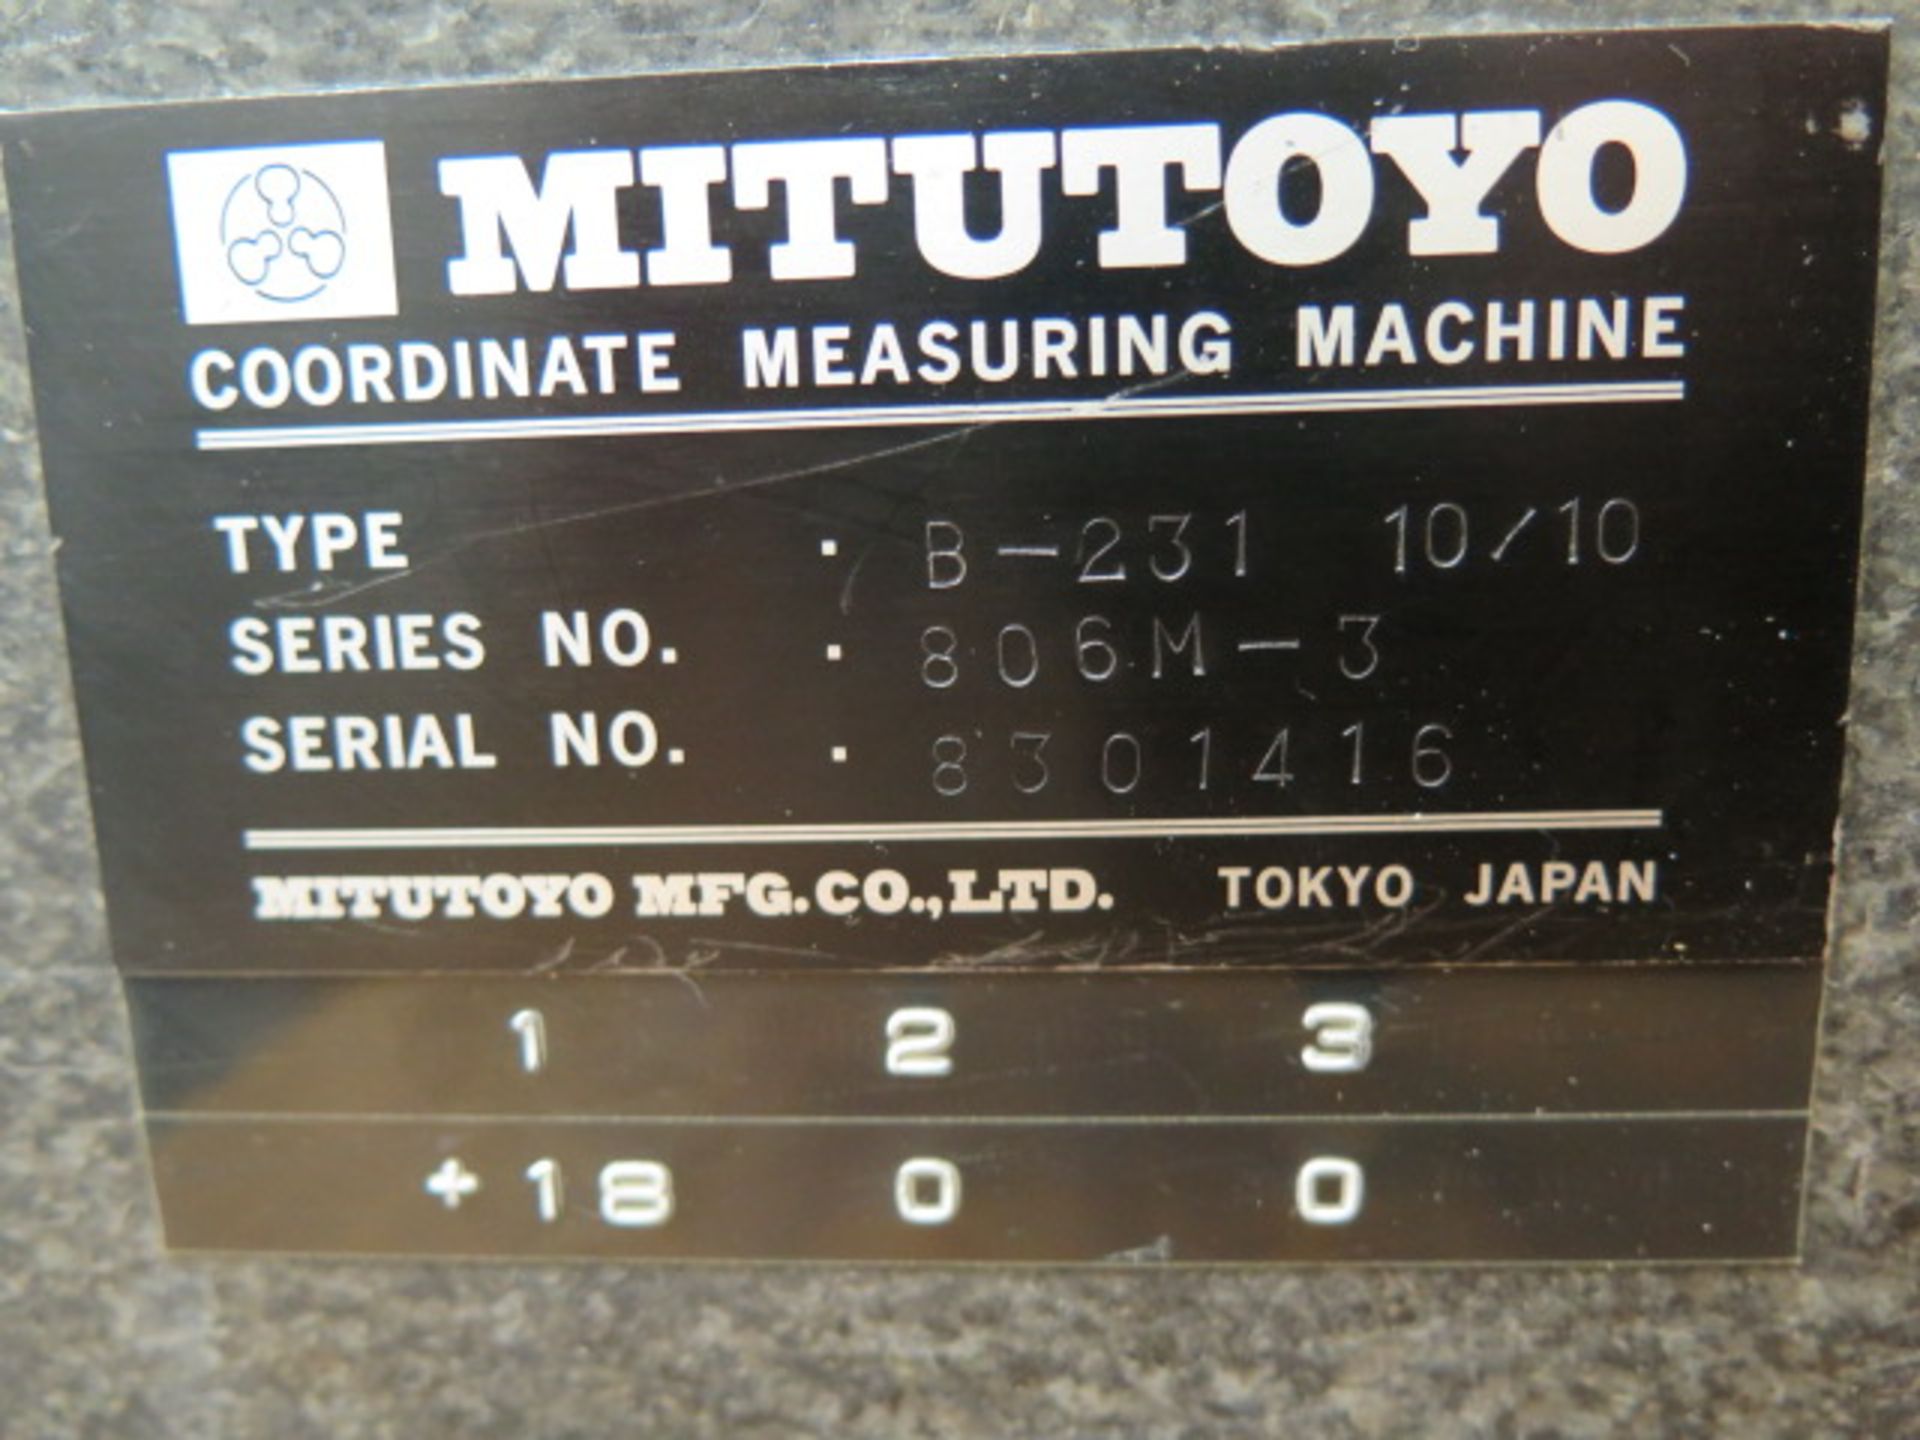 Mitutoyo B231 10/10 CMM Machine s/n 8301416 w/ Renishaw PH8 Probe Head, Mitutoyo MAG-1 Controller, - Image 11 of 11